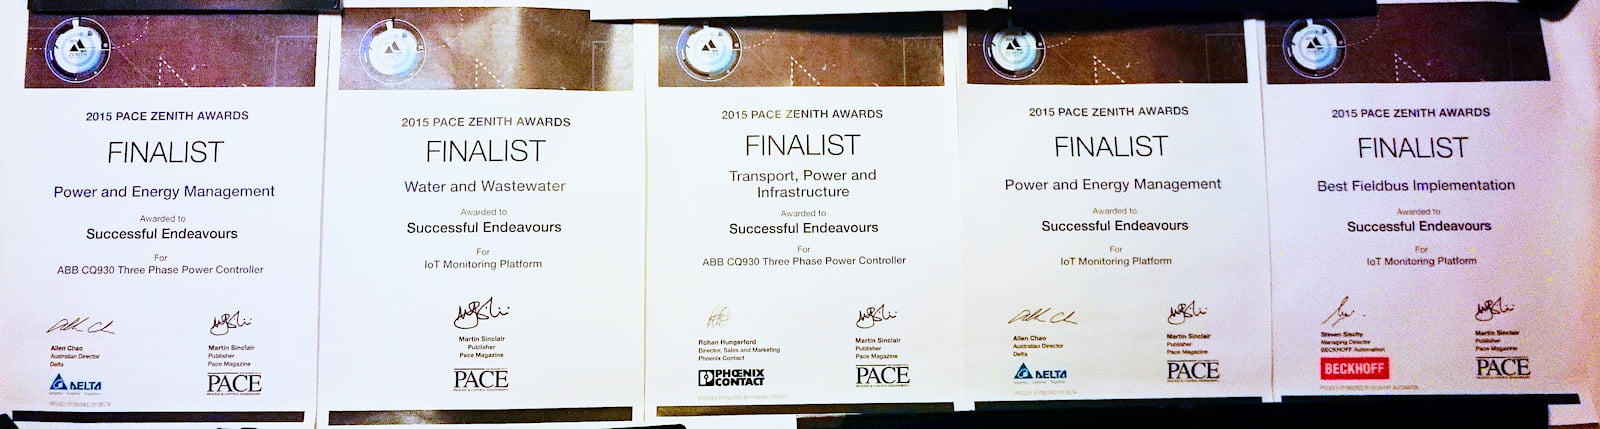 PACE Zenith Awards - 5 Finalist Certificates - Successful Endeavours 2015